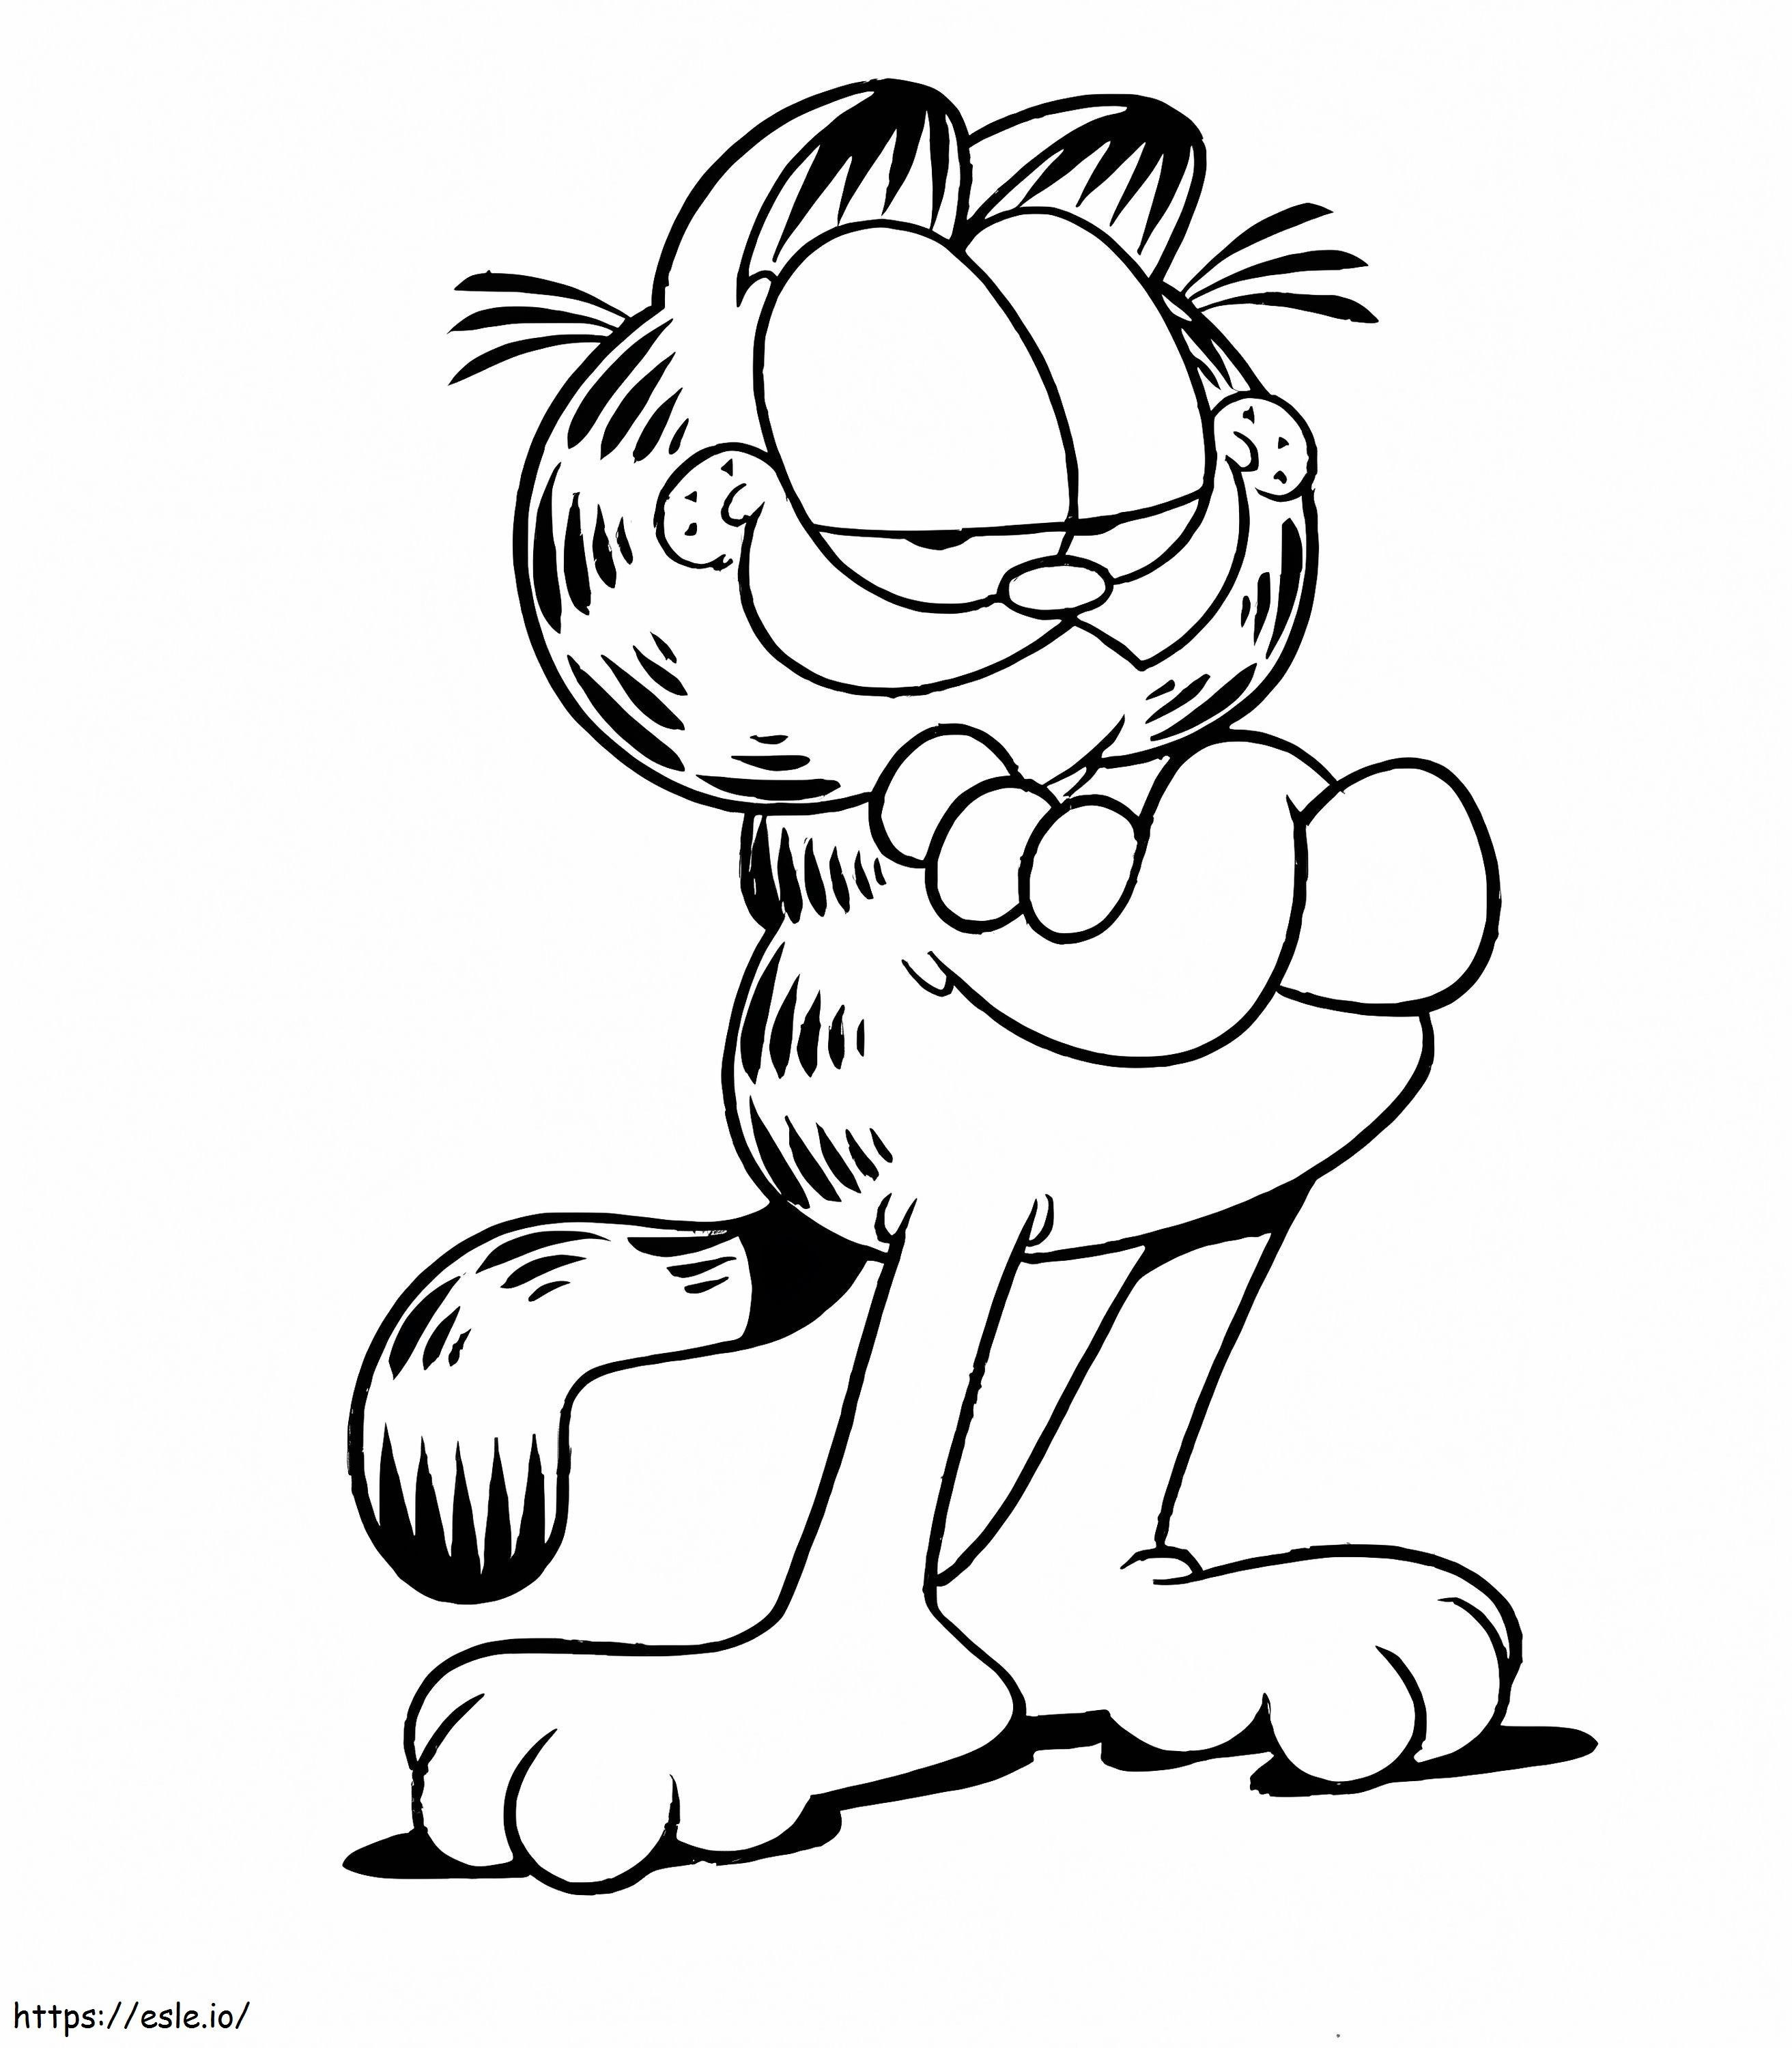 Genial Garfield coloring page